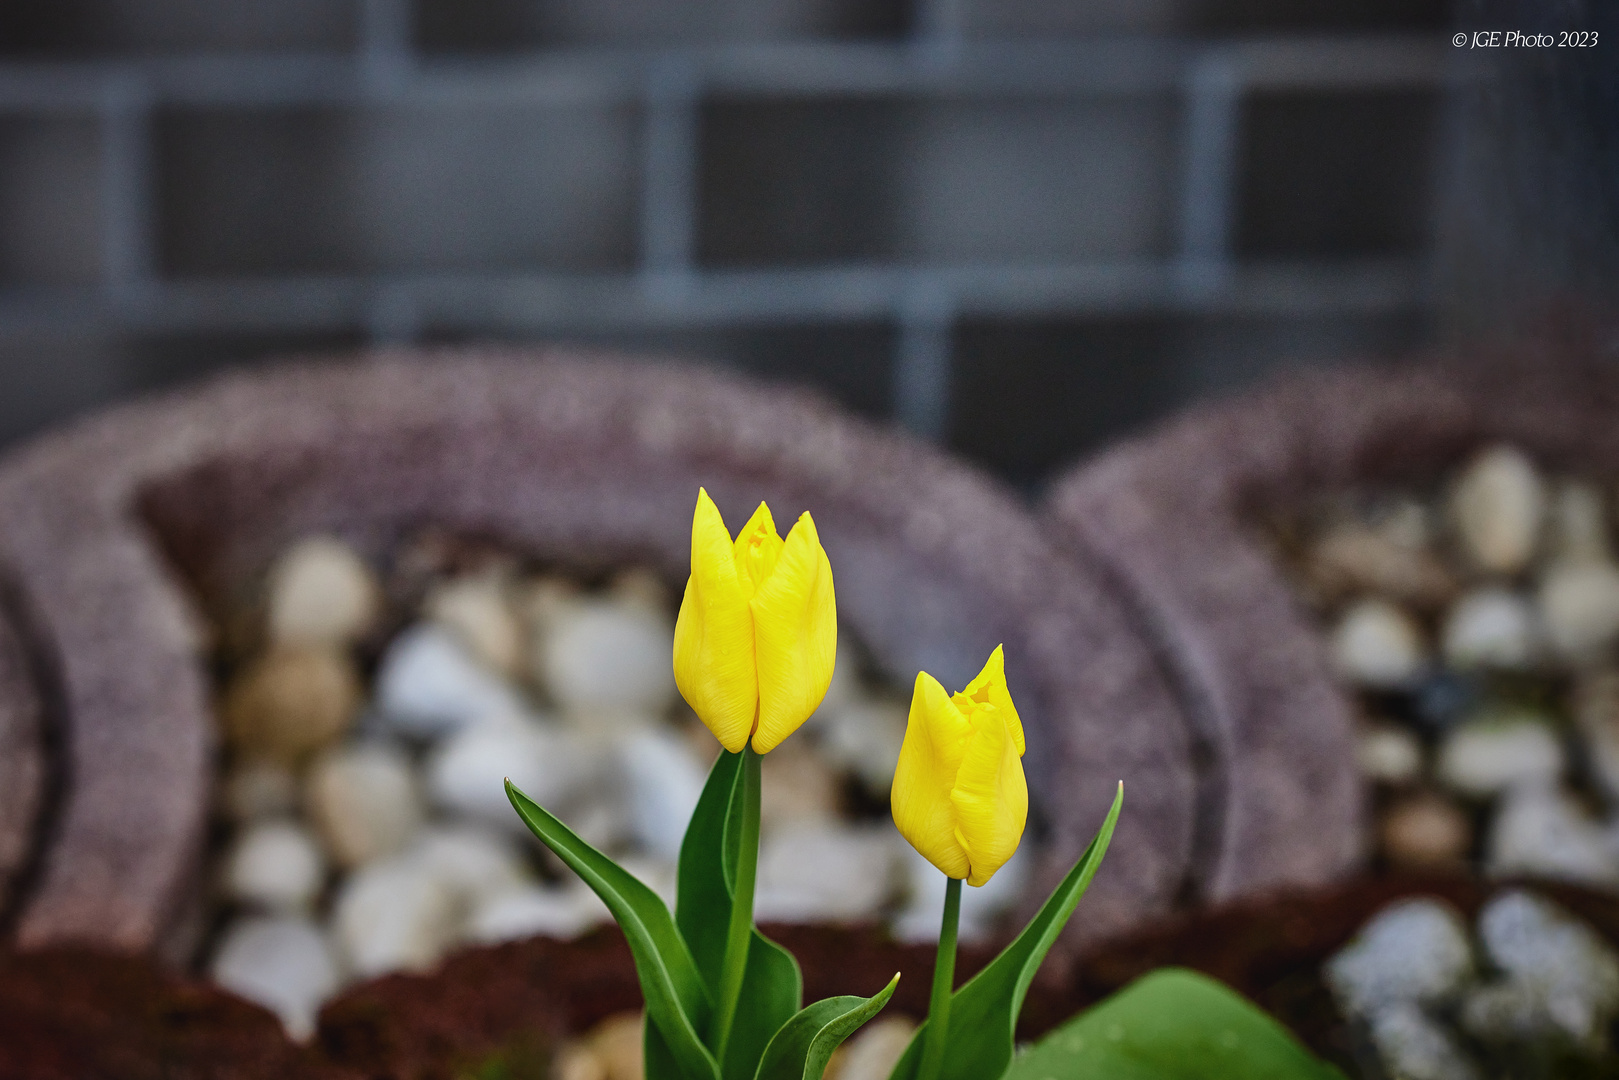 Zwei gelbe Tulpen vor dem Kiesbeet